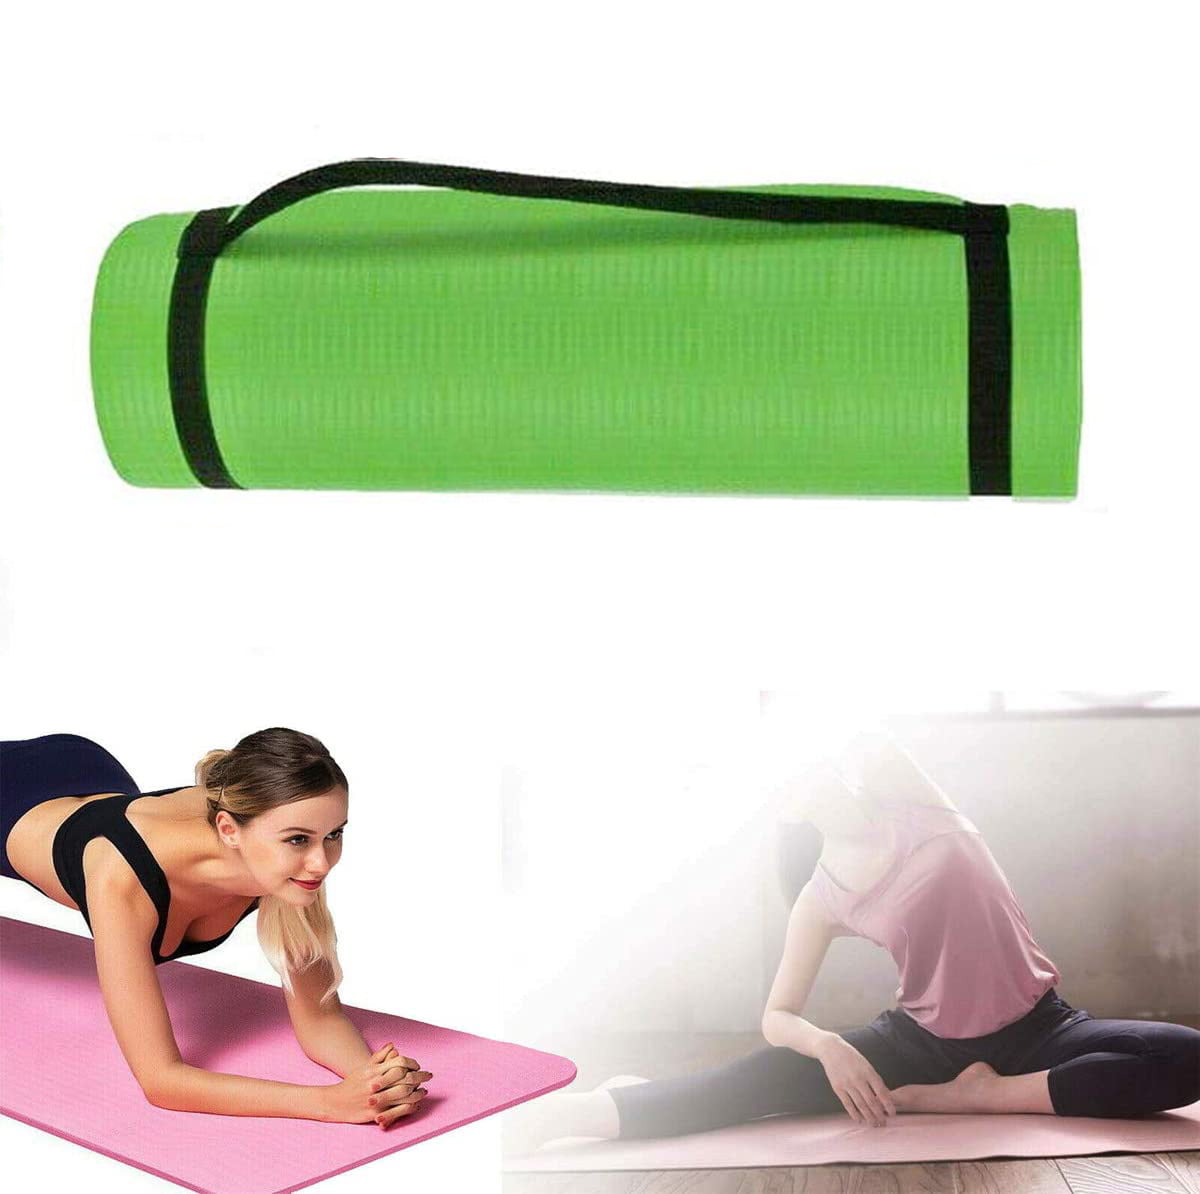 Yoga Mat Gymnastic Workout Non-Slip Exercise Physio Pilates Sport 173*61cm 